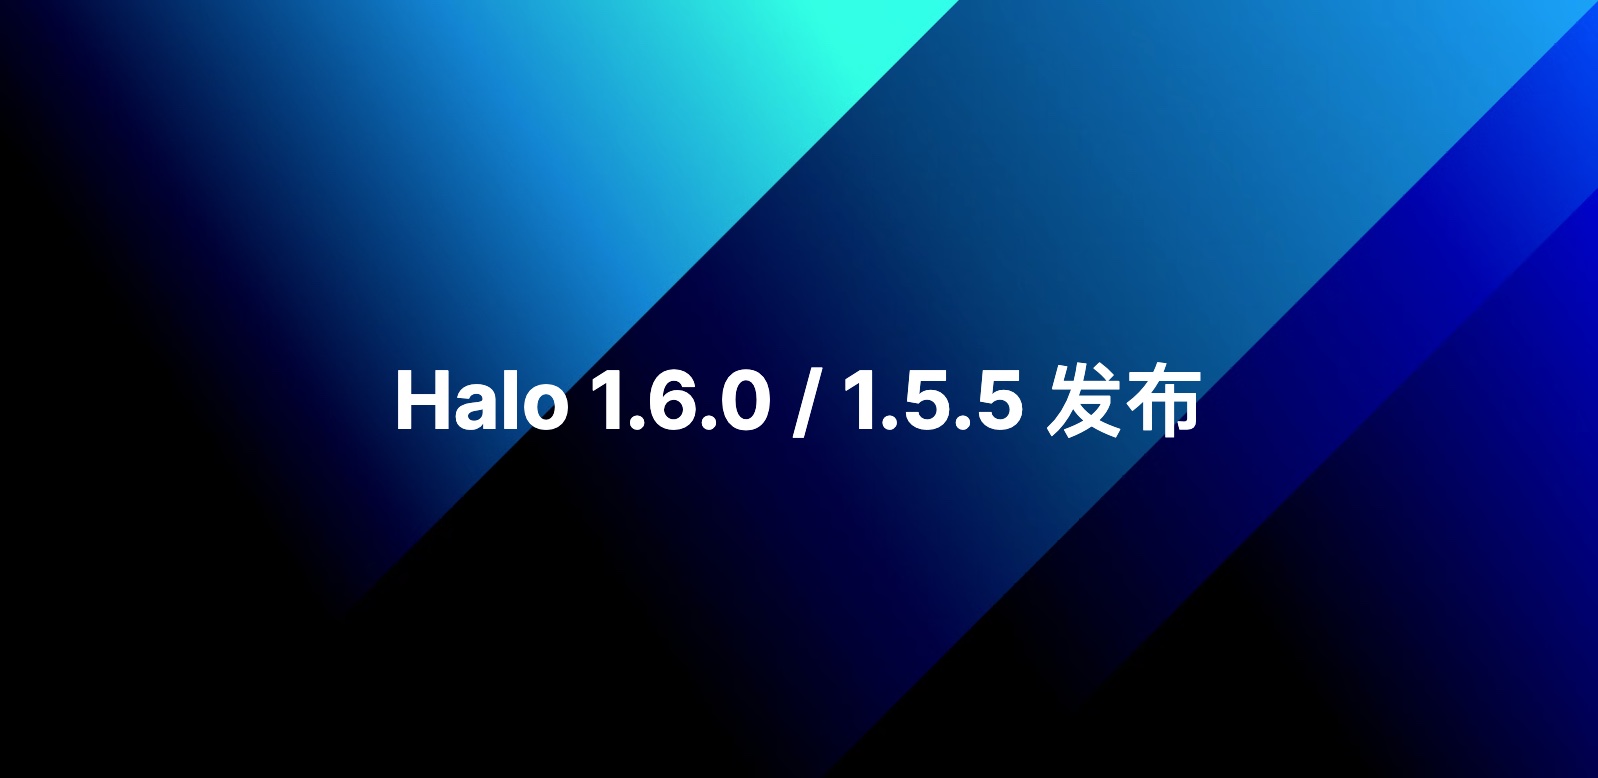 Halo 1.6.0 和 1.5.5 发布